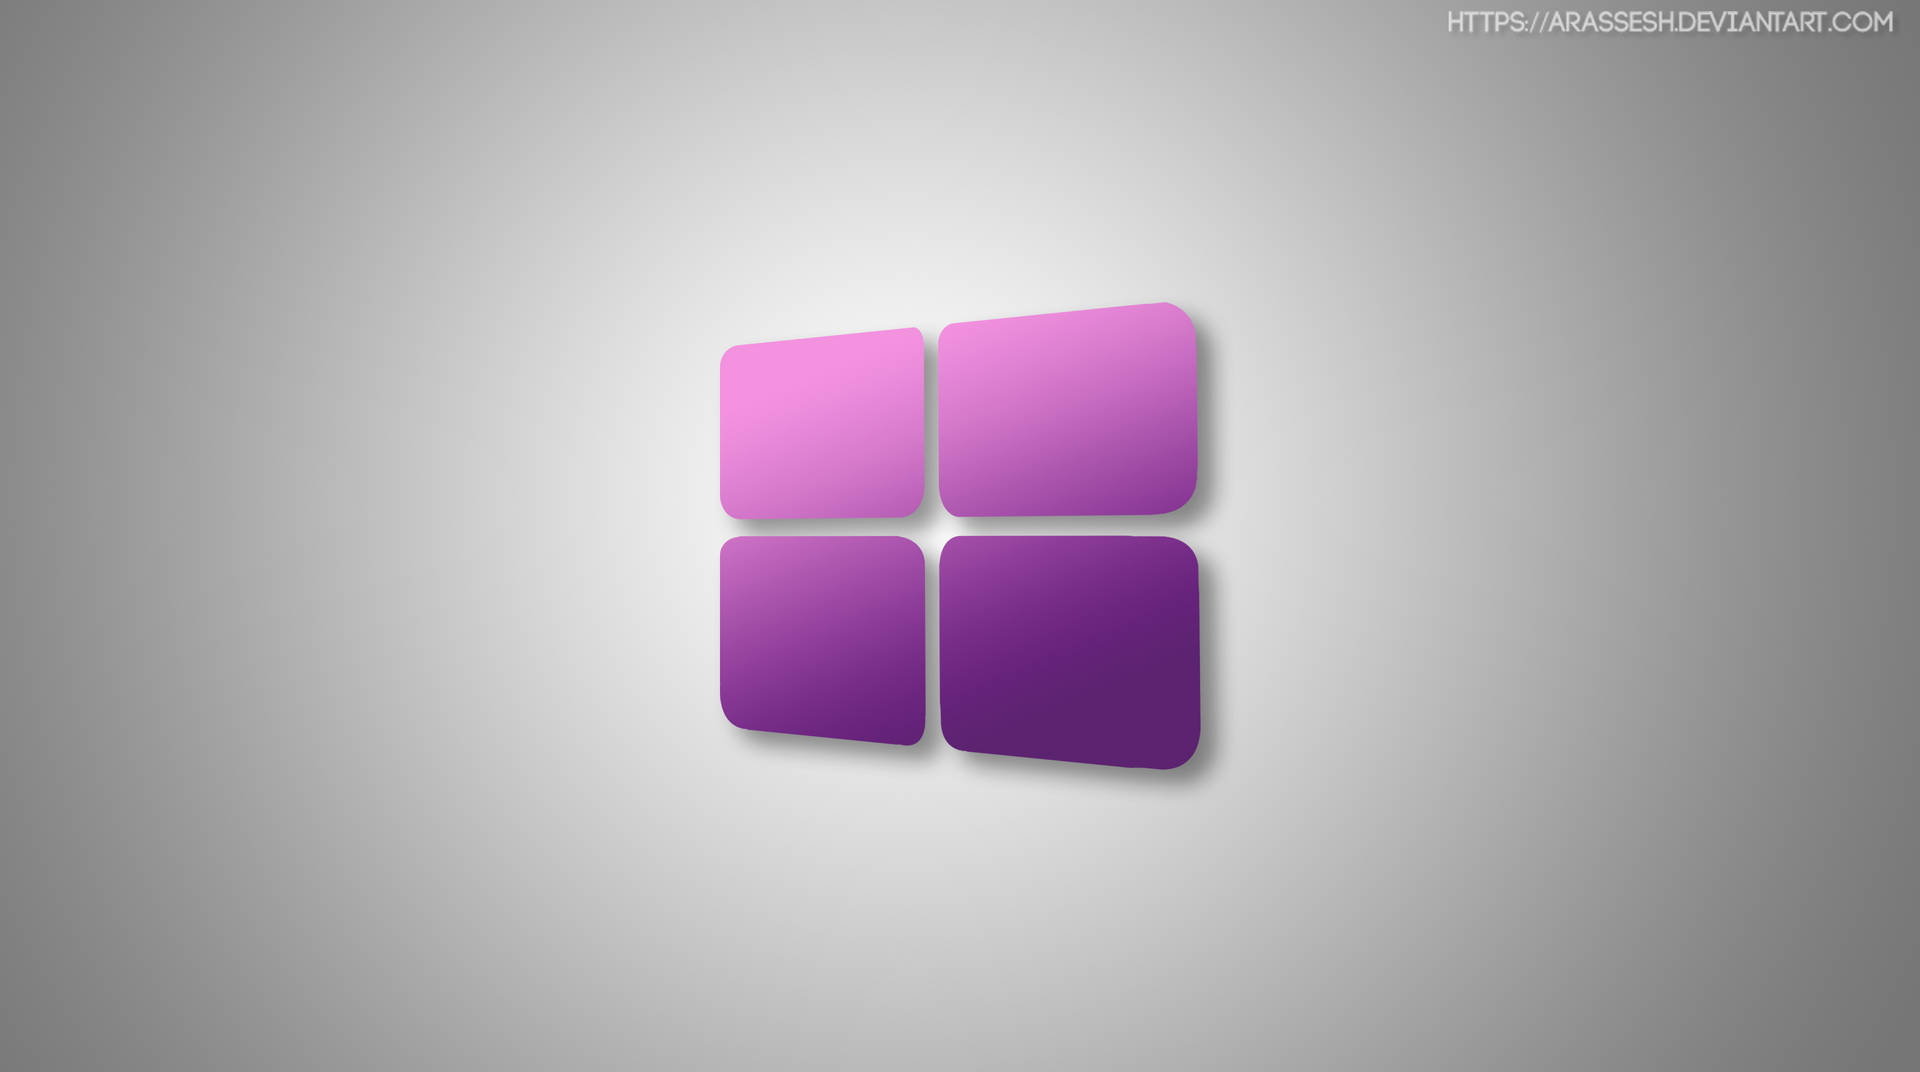 Minimalist Windows 10 Hd Purple Logo Background